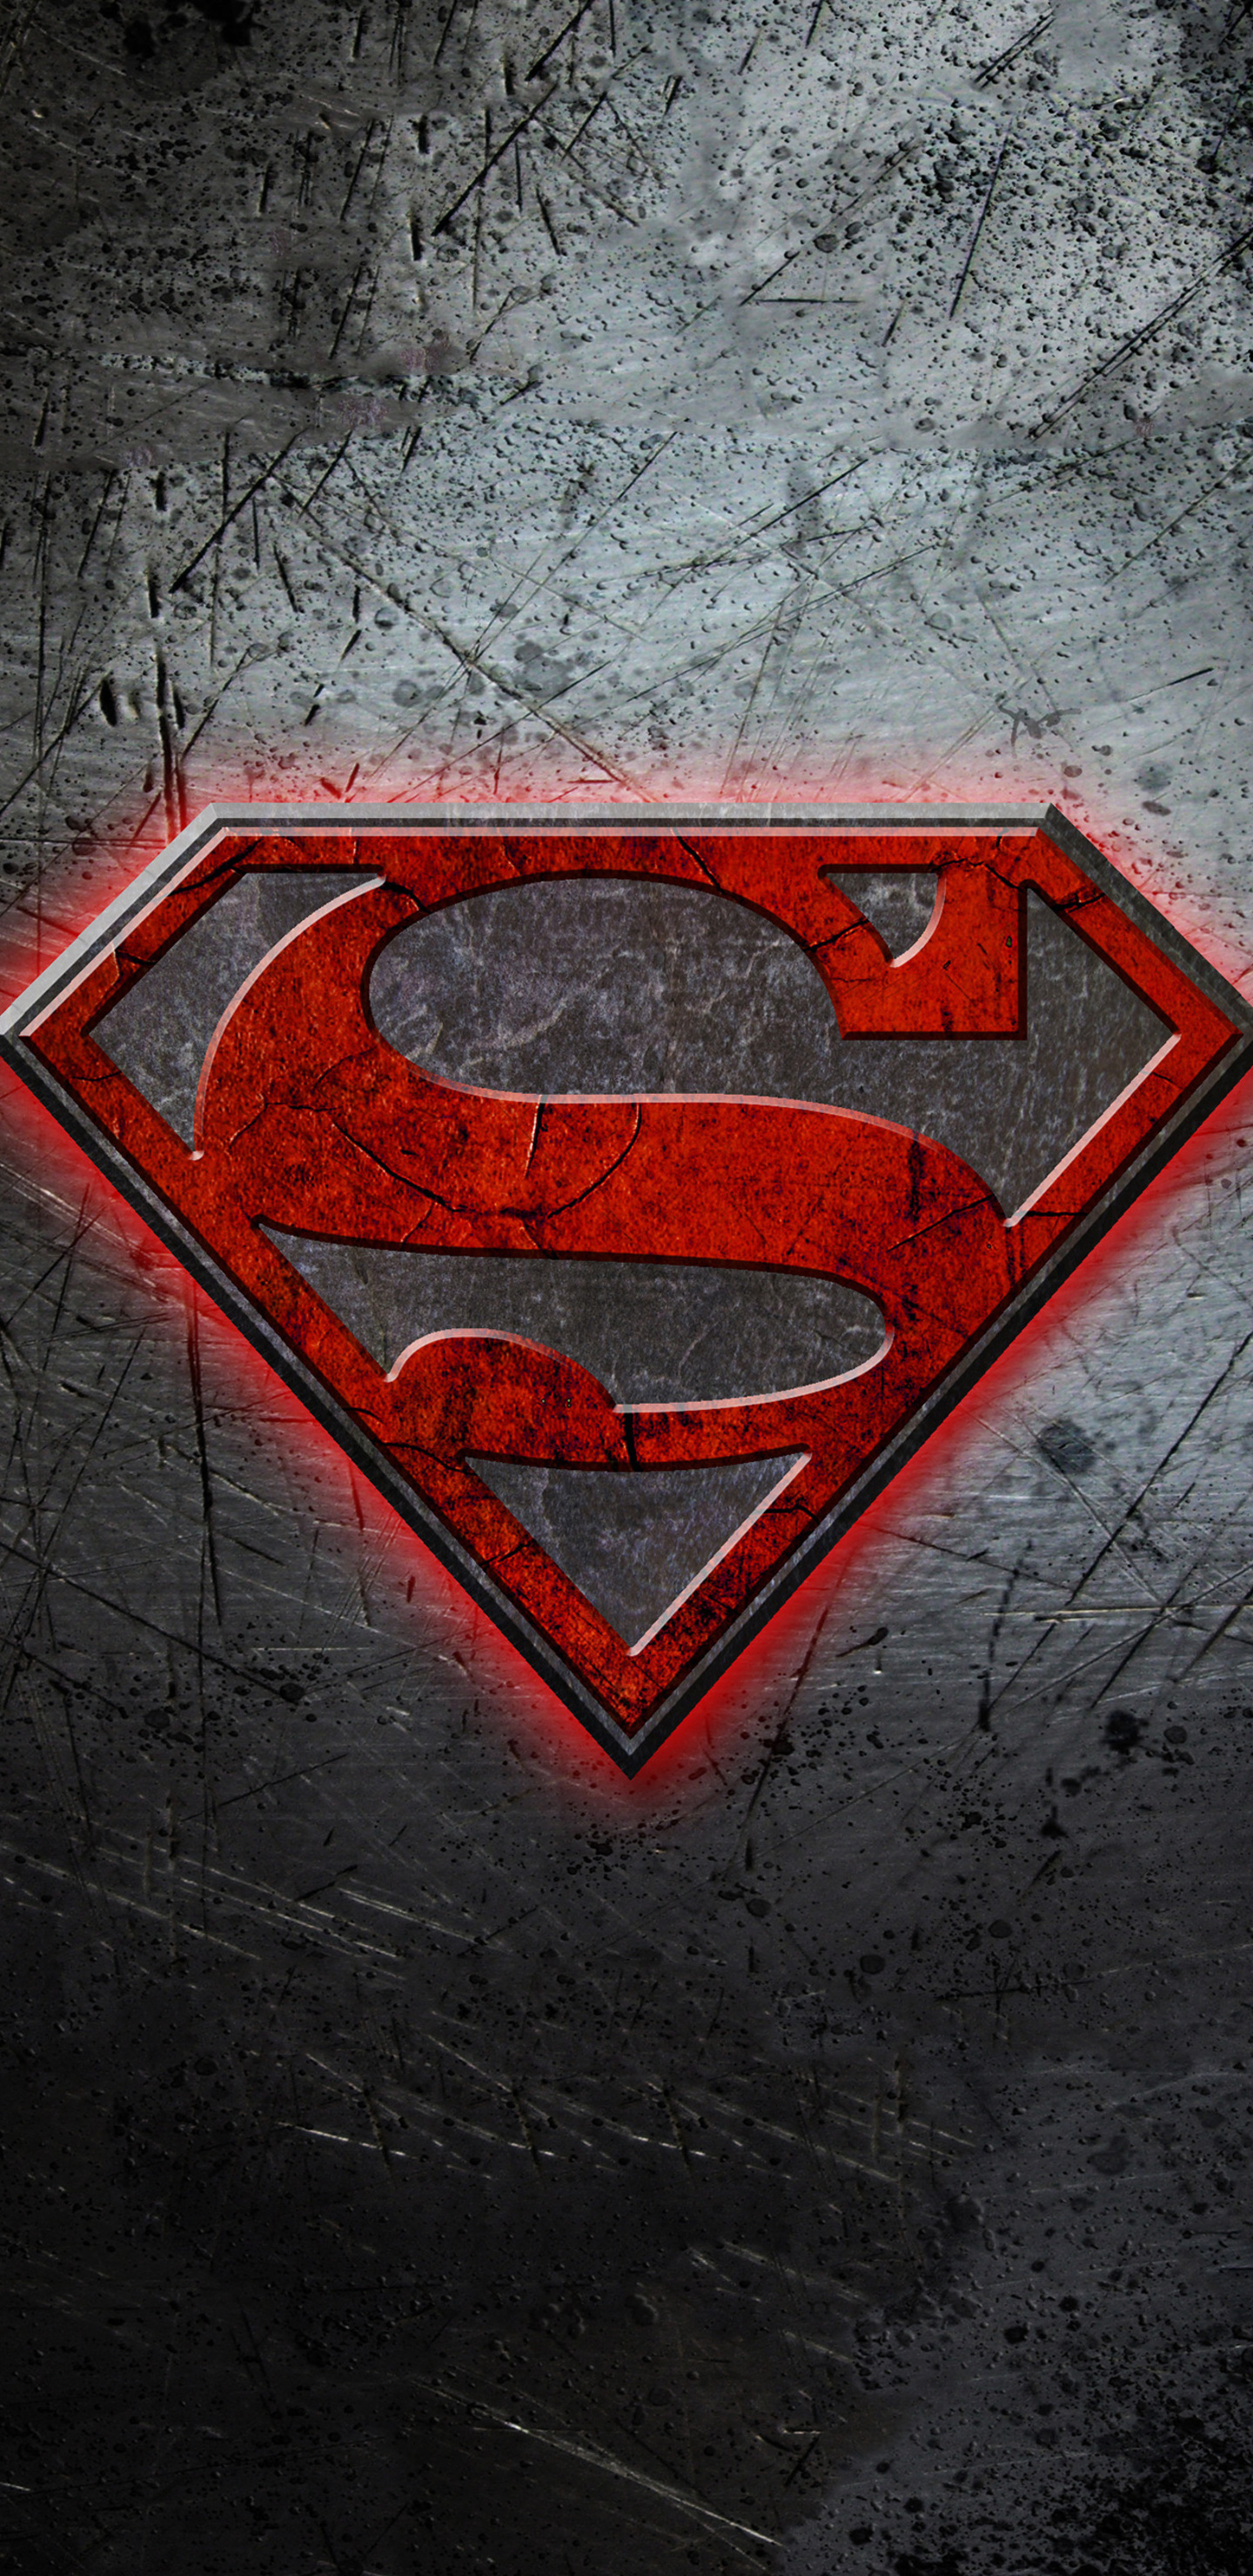 1440x2960 Superman Logo 4k Samsung Galaxy Note 9,8, S9,S8 ...